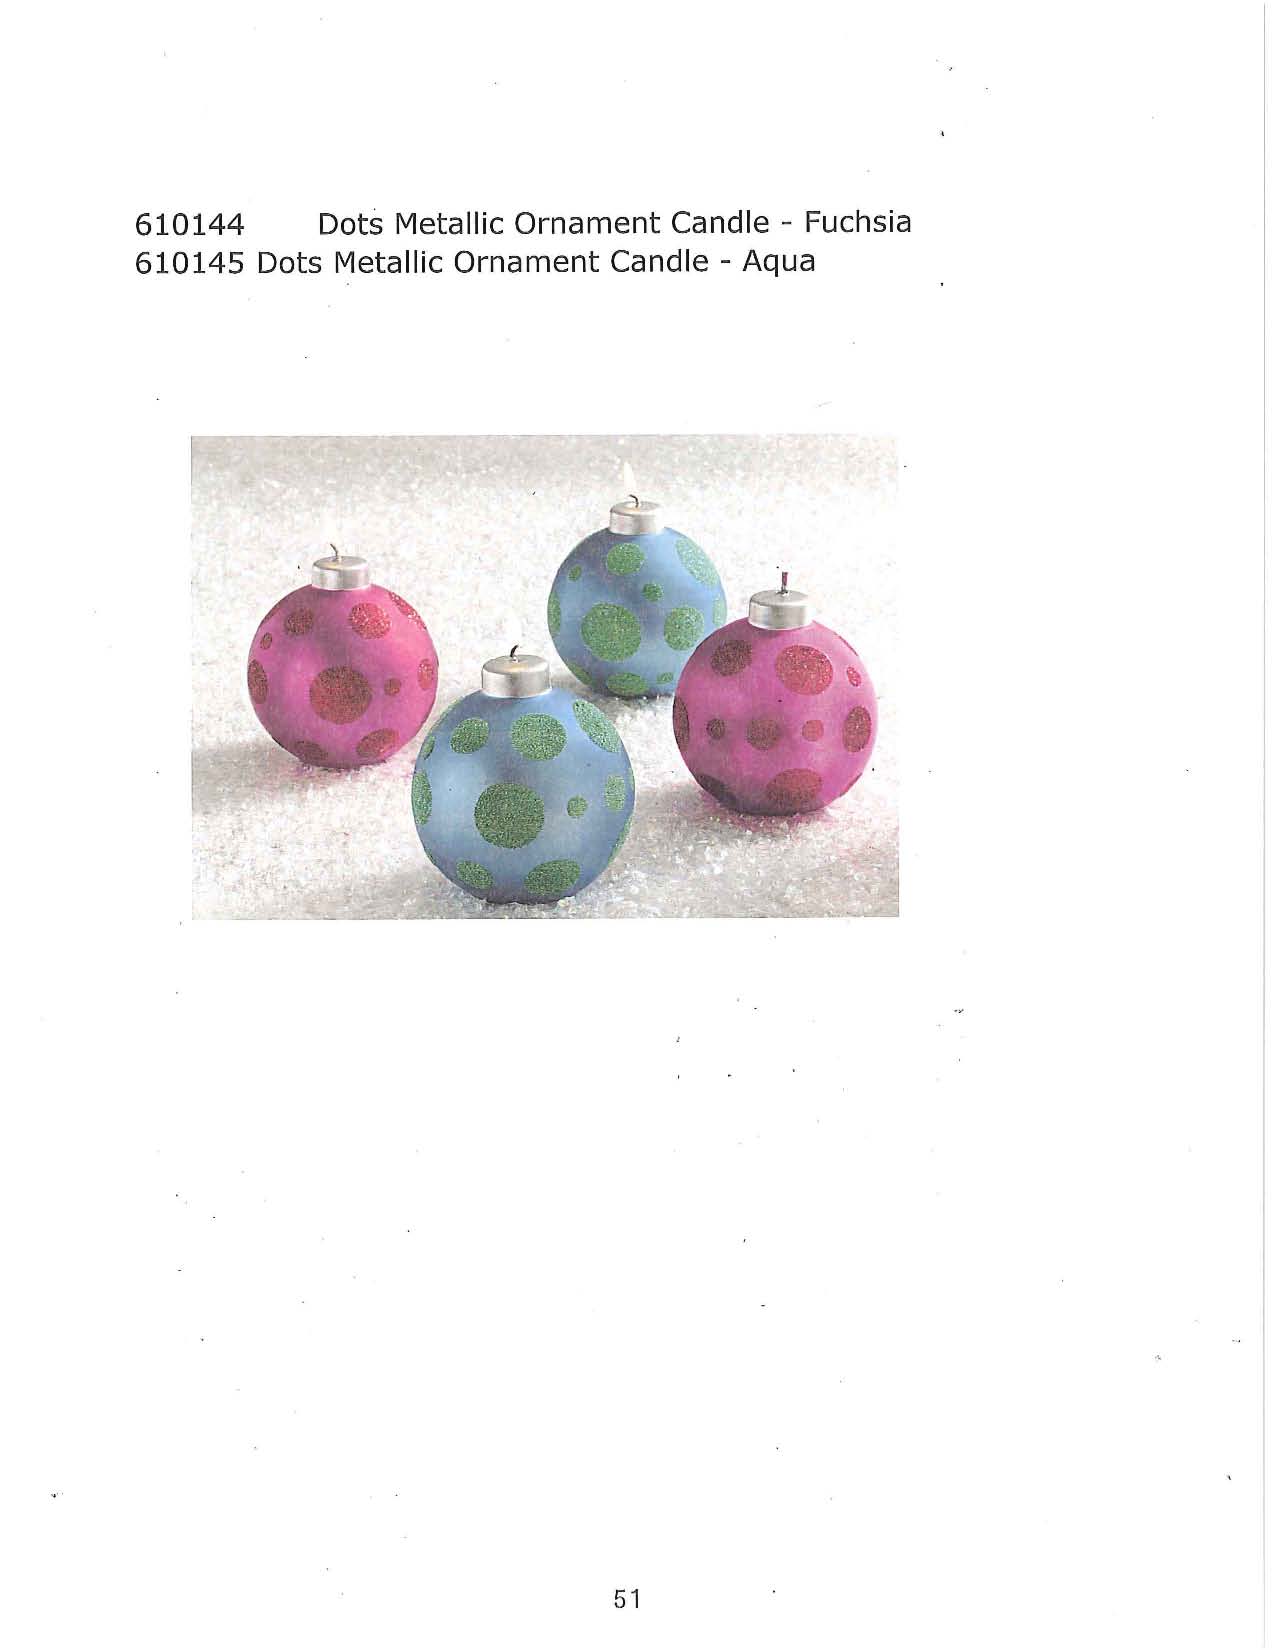 Dots Metallic Ornament Candle - Fuchsia and Aqua